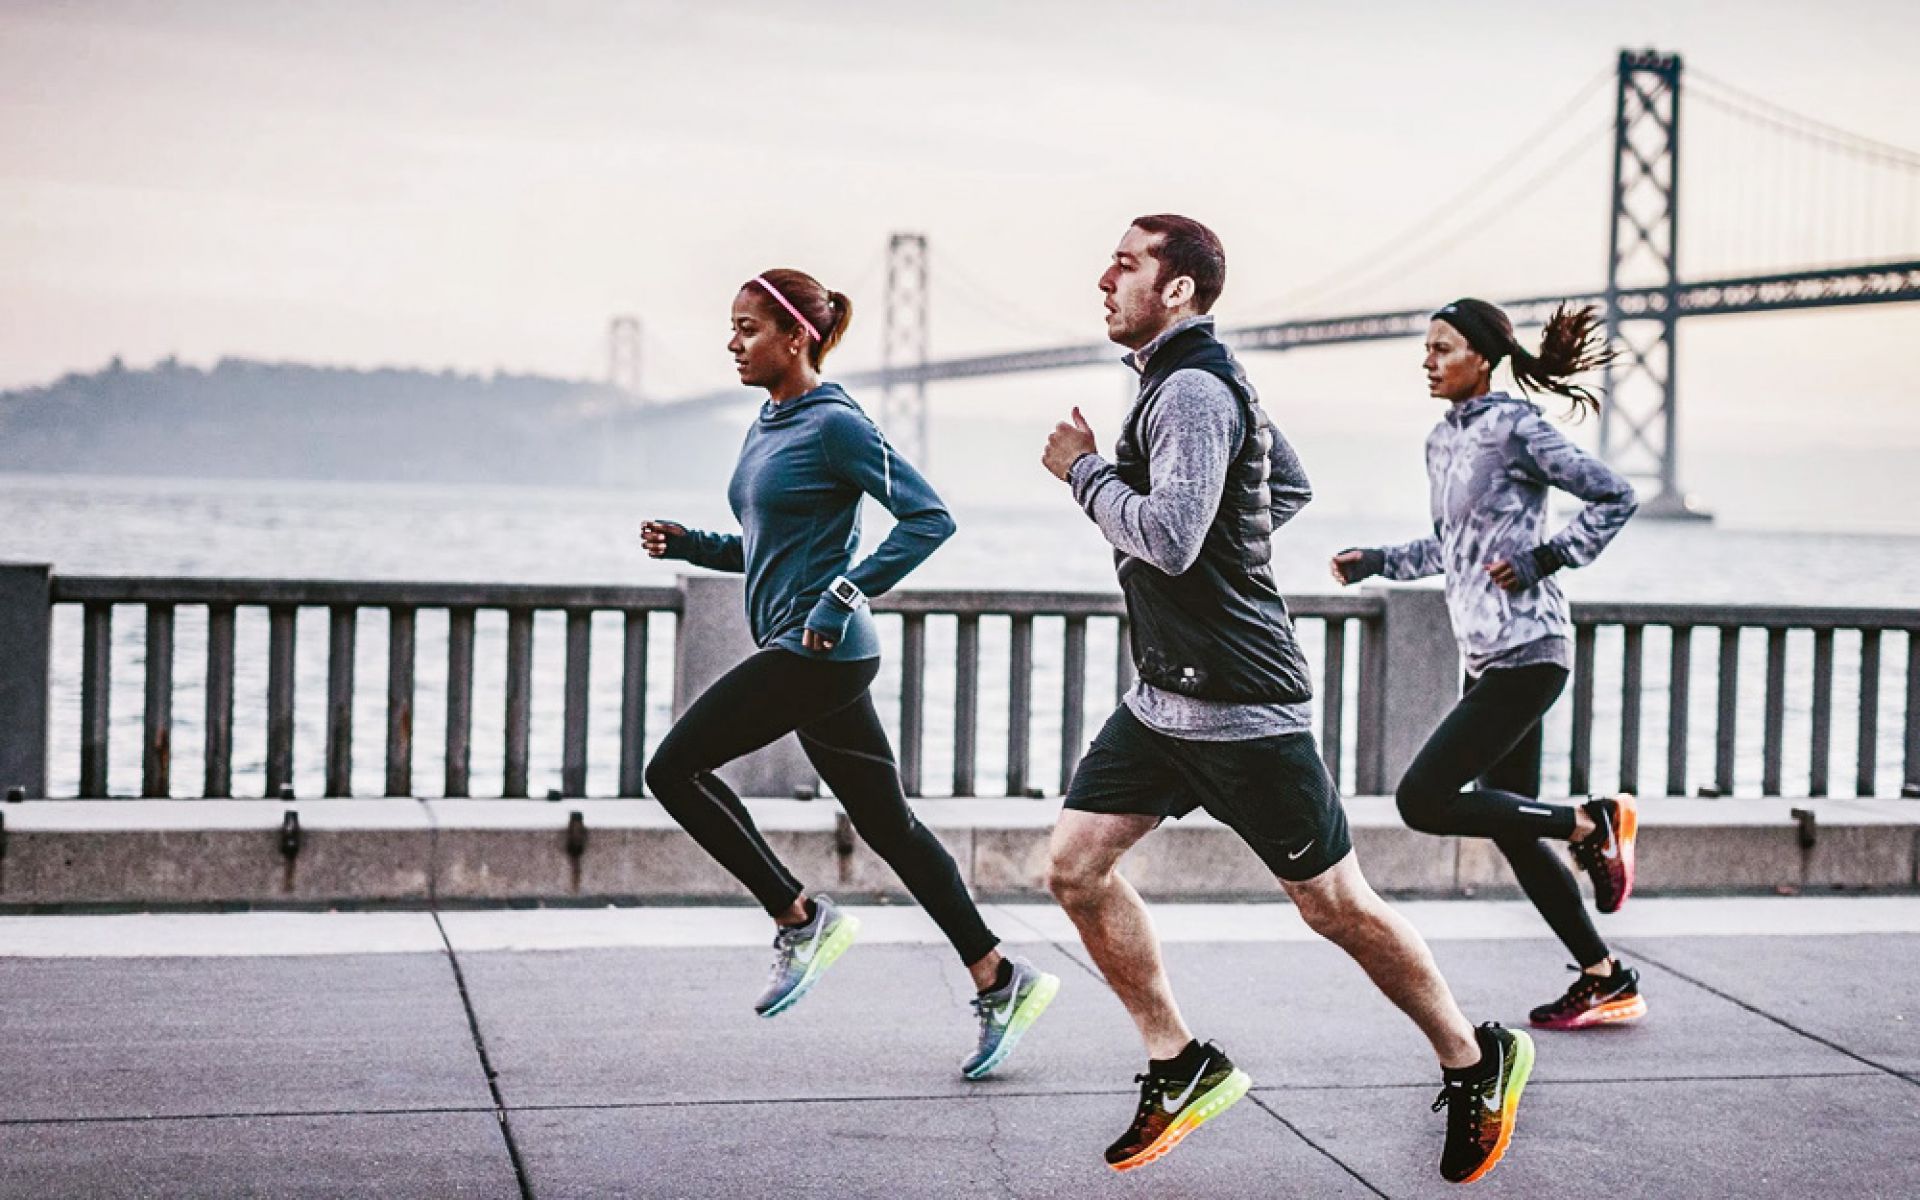 Running for cover. Nike Running. Nike Running бег. Занятие спортом. Стильный спортивный образ.